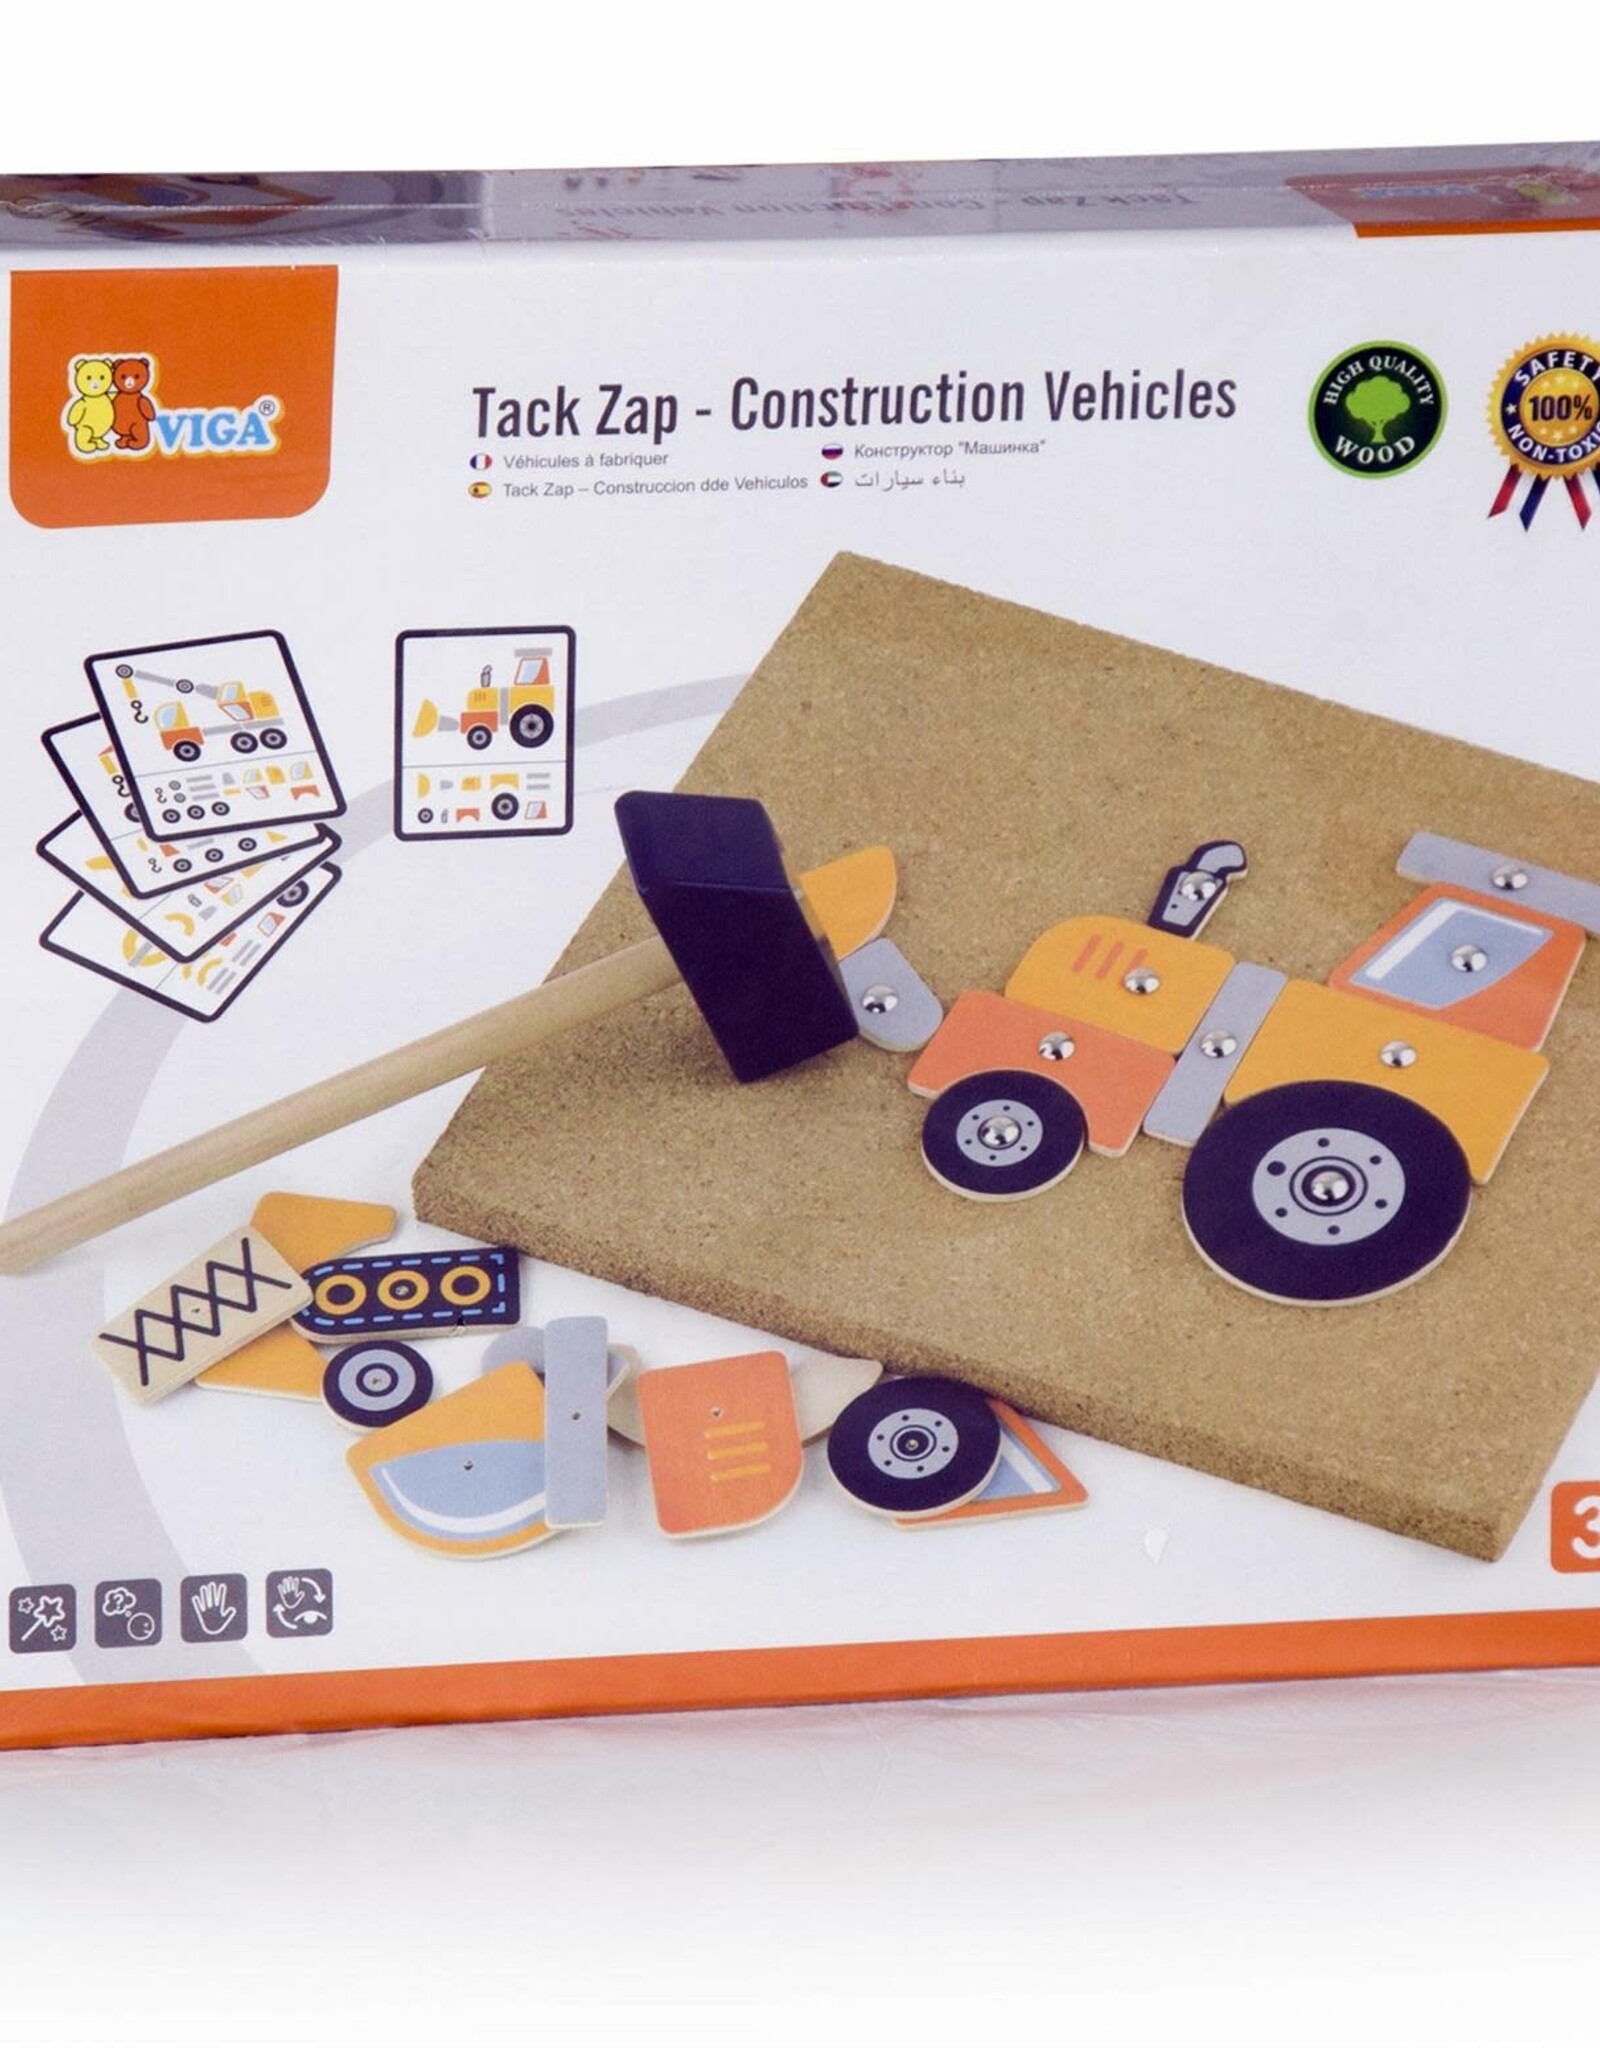 TACK ZAP - CONSTRUCTION